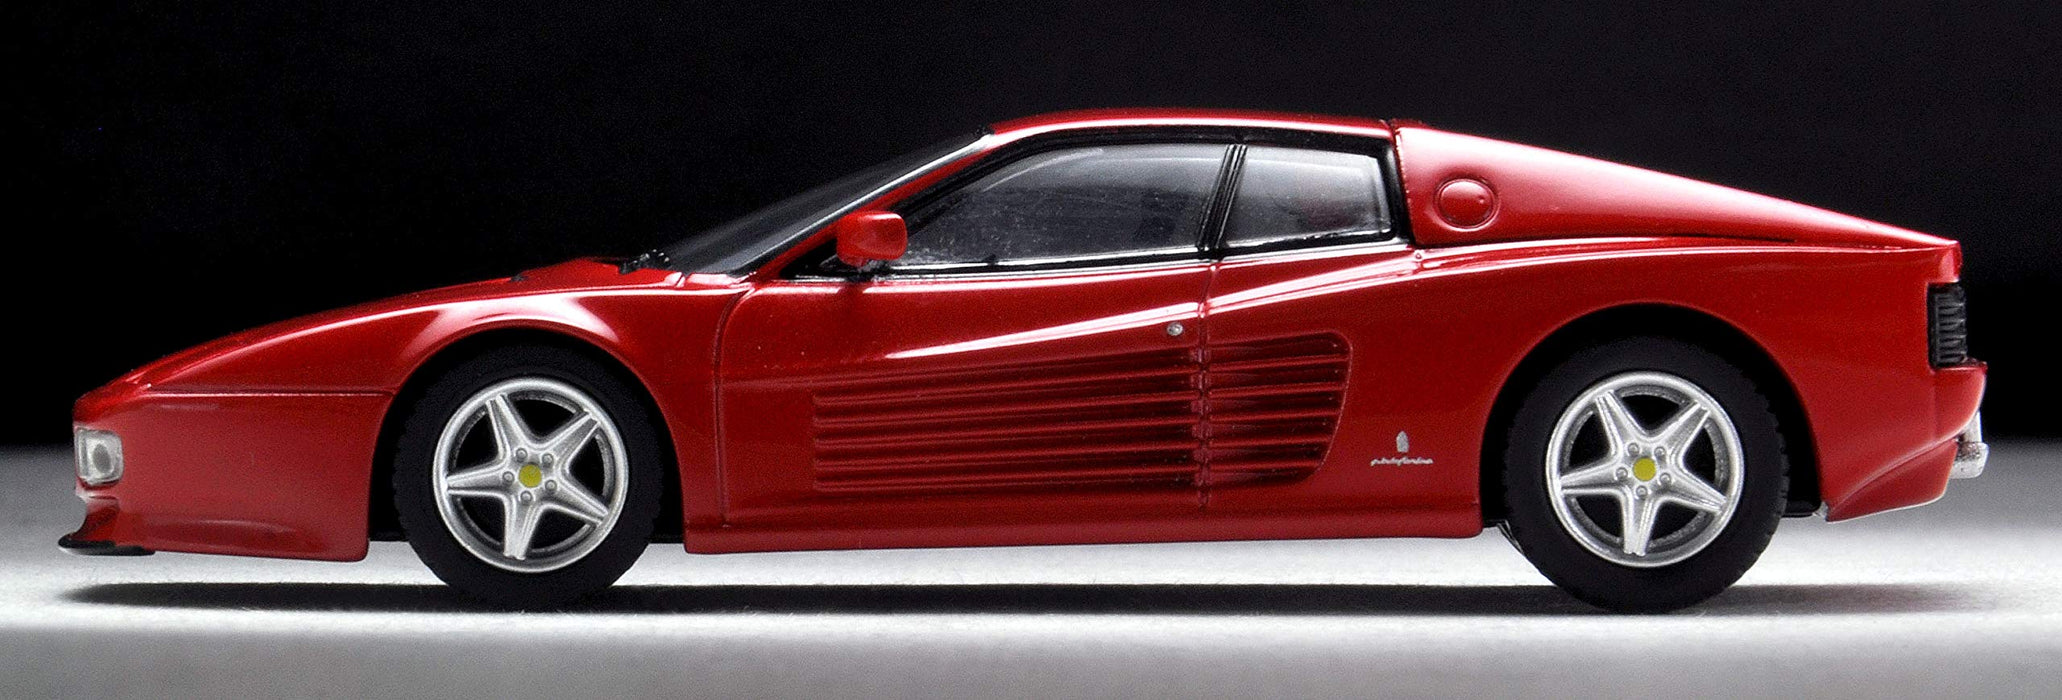 Tomica Limited Vintage Neo 1/64 Tlv-Neo Ferrari 512Tr Rot Fertigprodukt